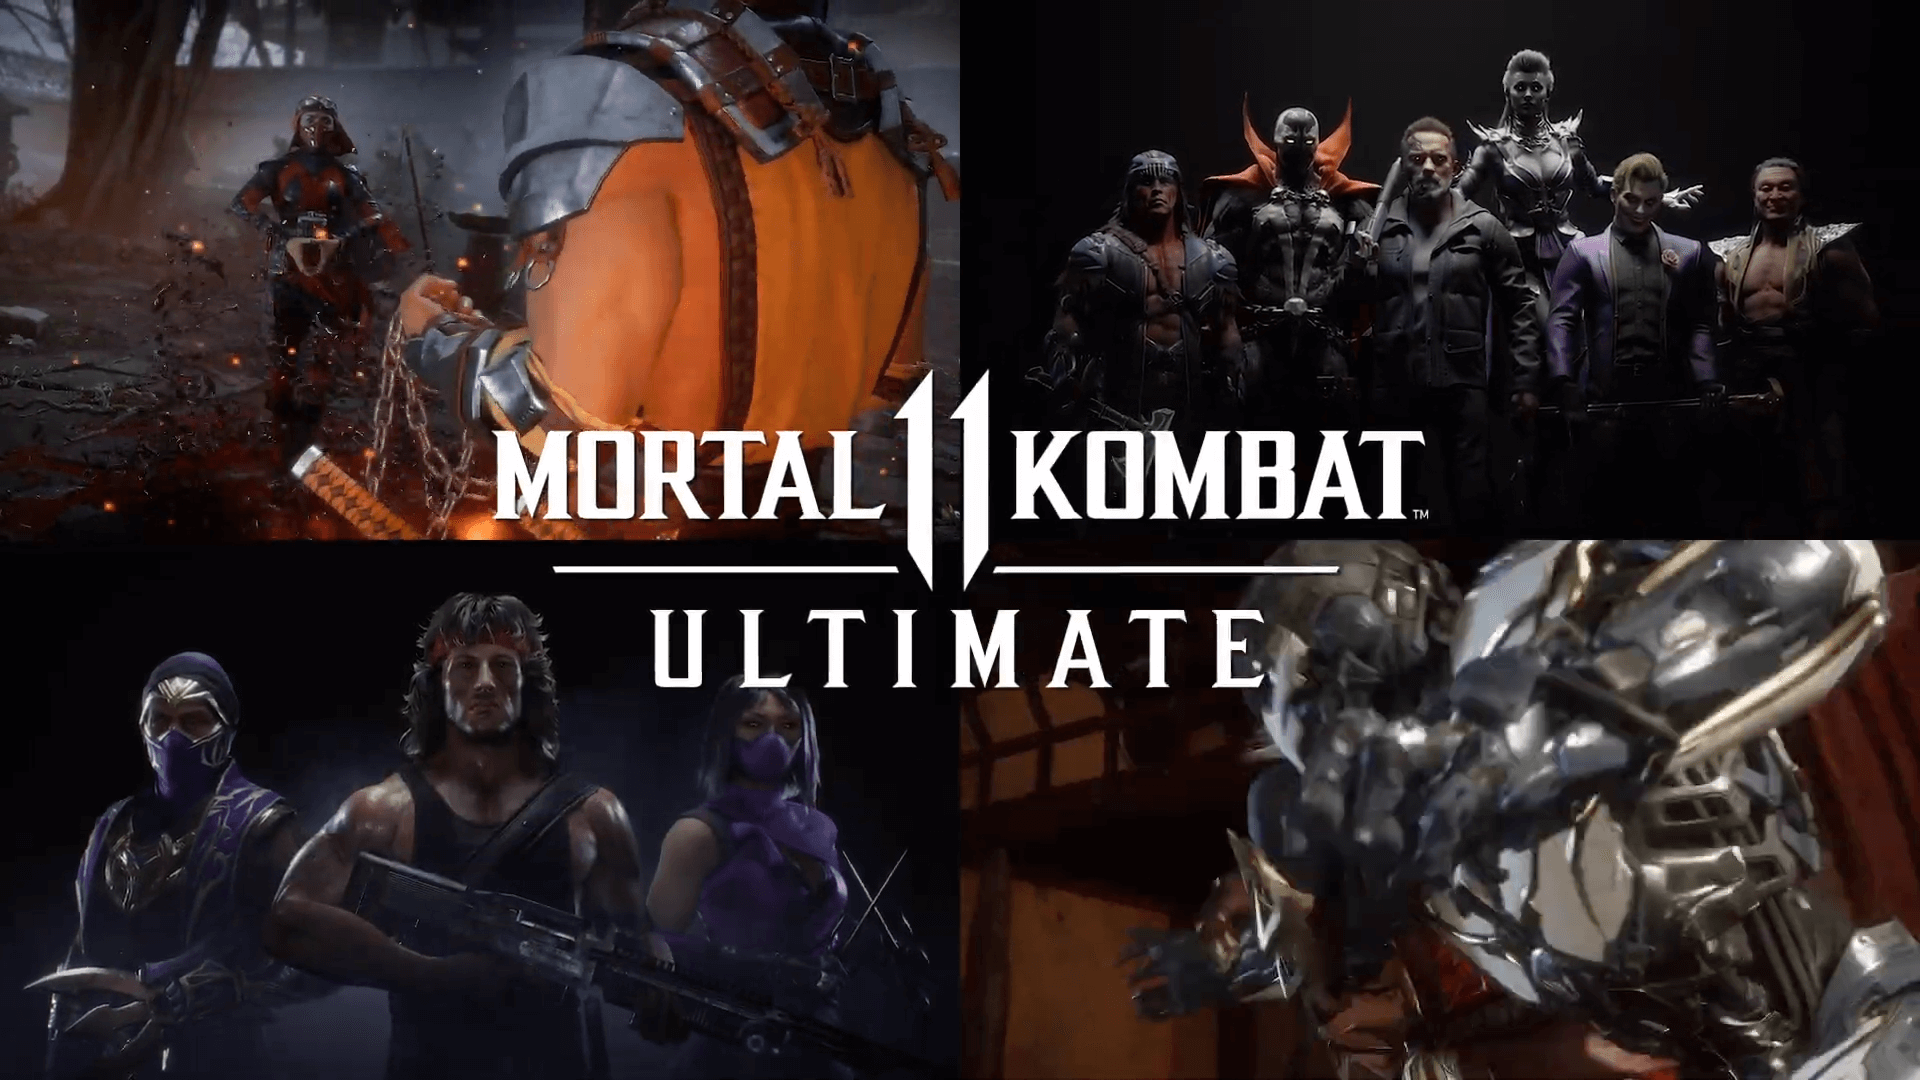 Mortal Kombat 11 Ultimate Patch notes